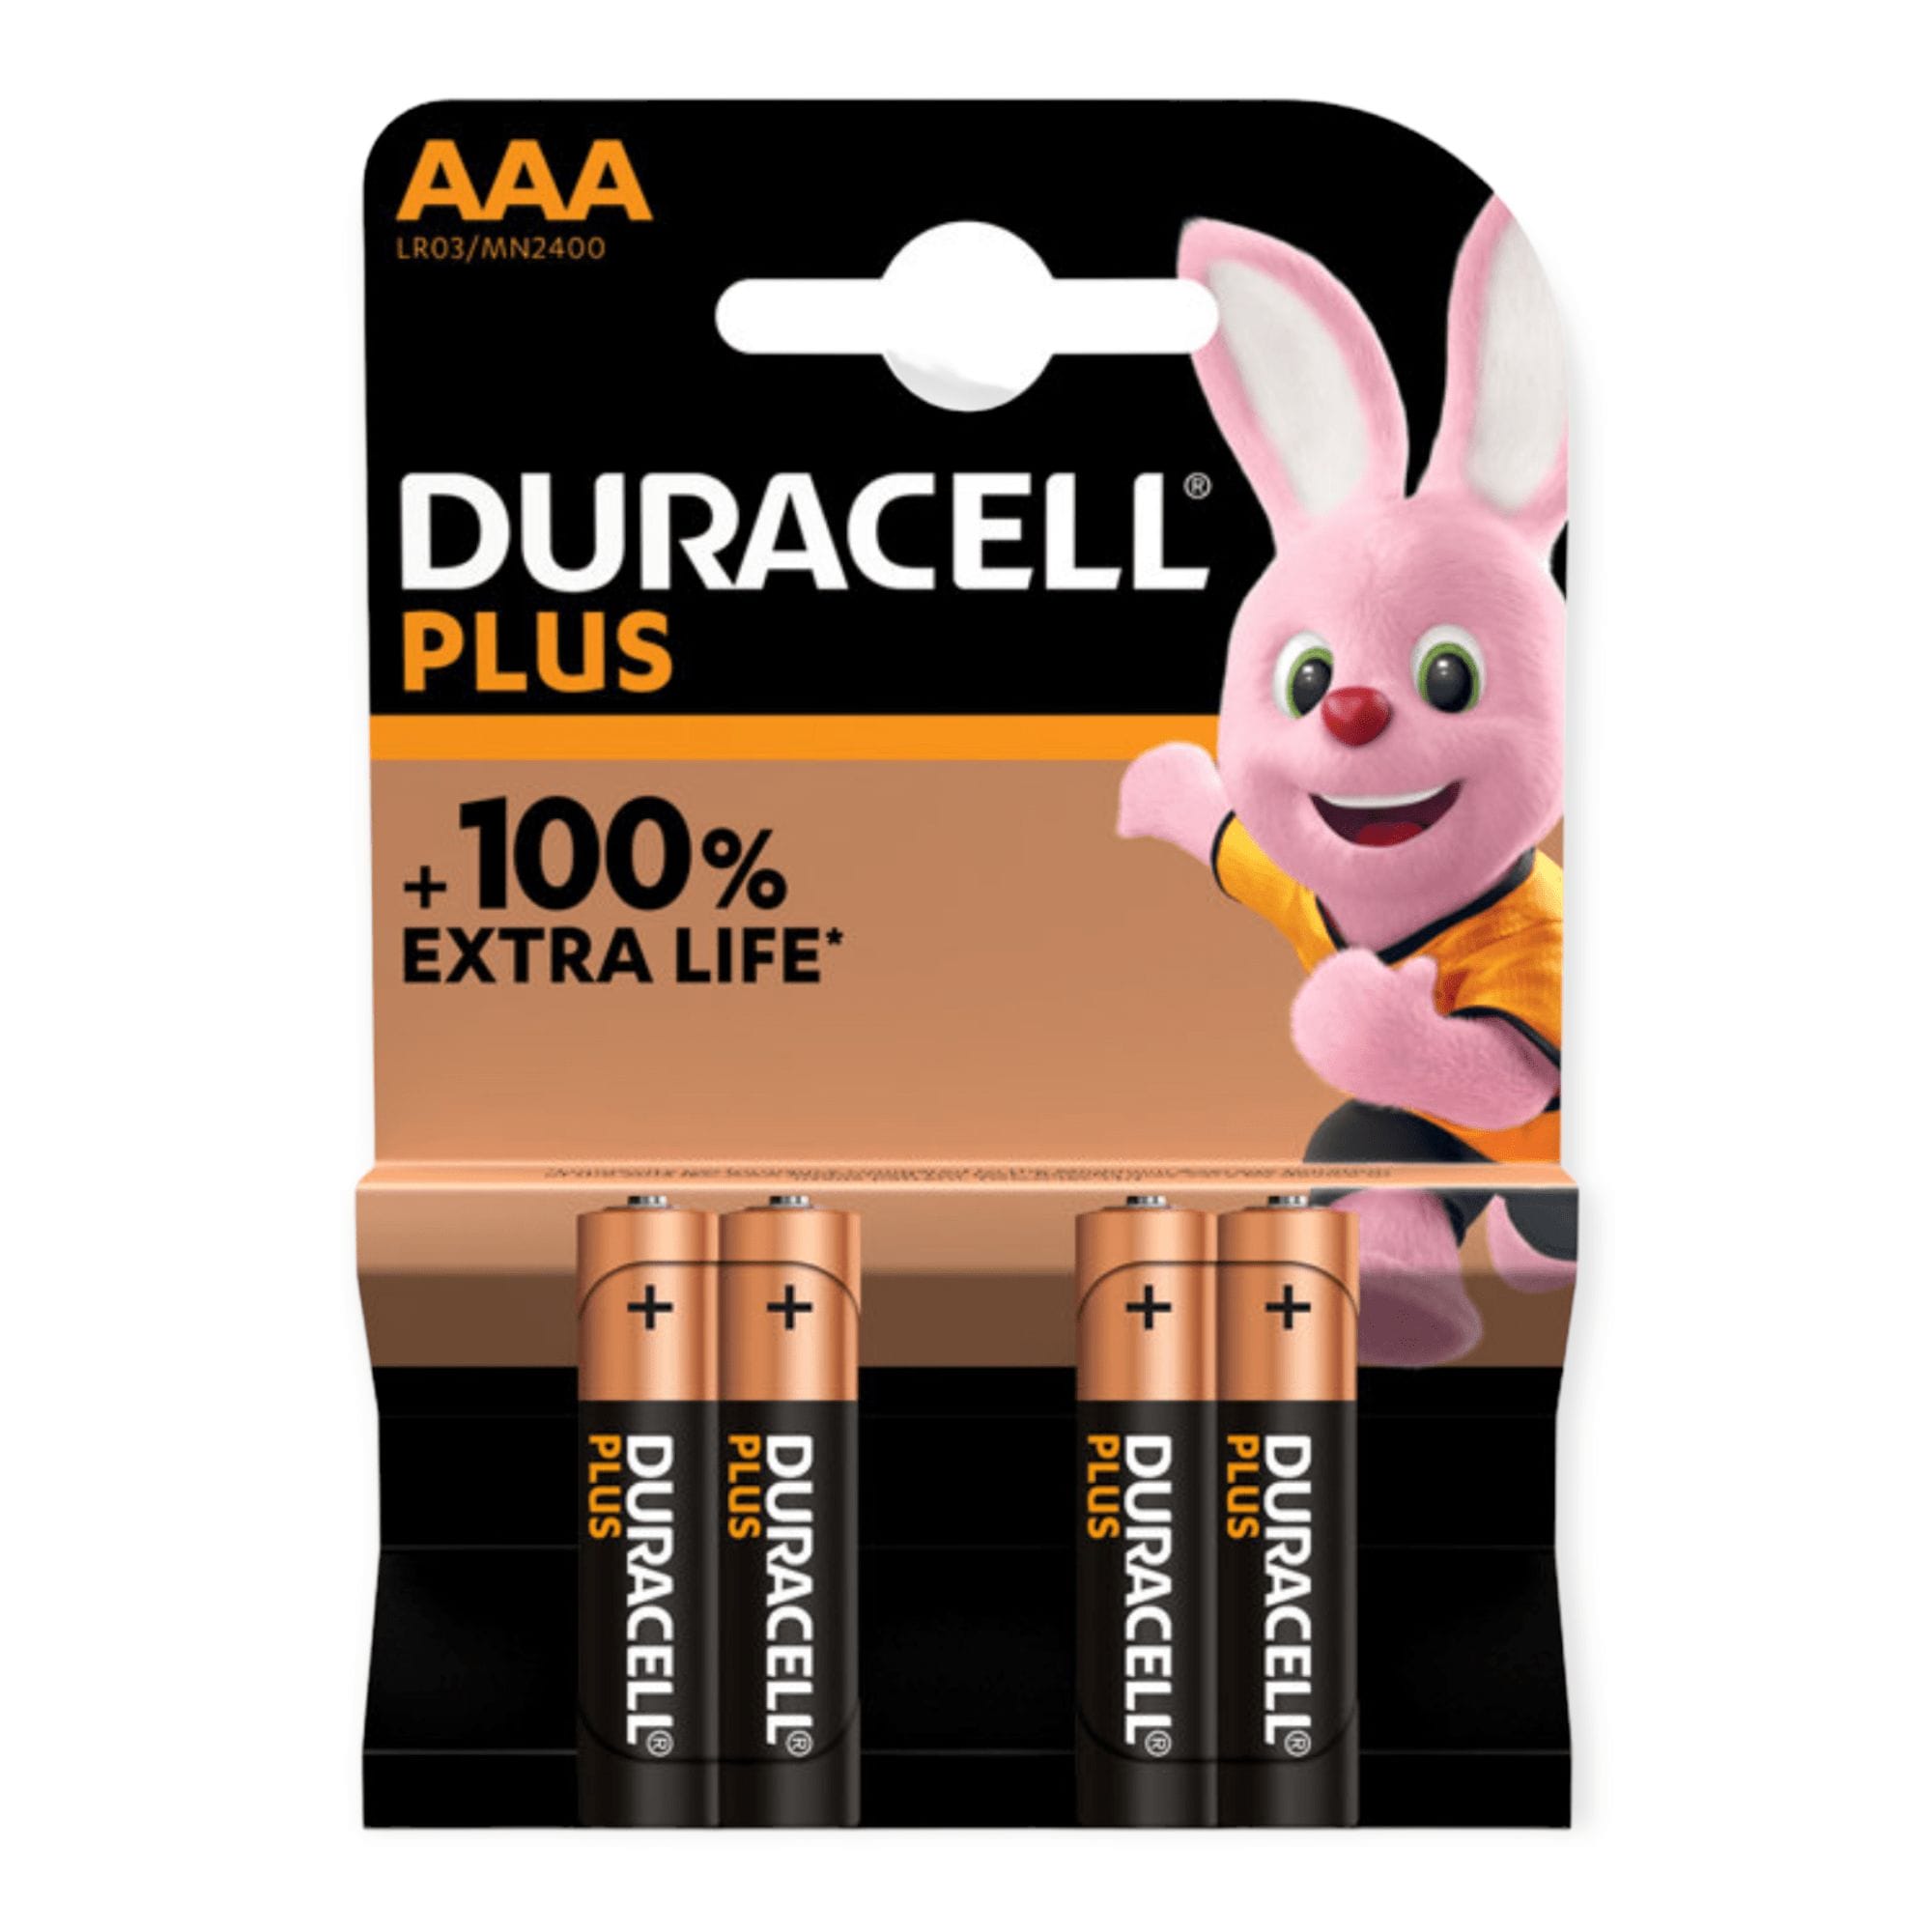 Frigøre forfølgelse Specialist Duracell Plus batteri AAA 4-pk. | Plysdyr.dk